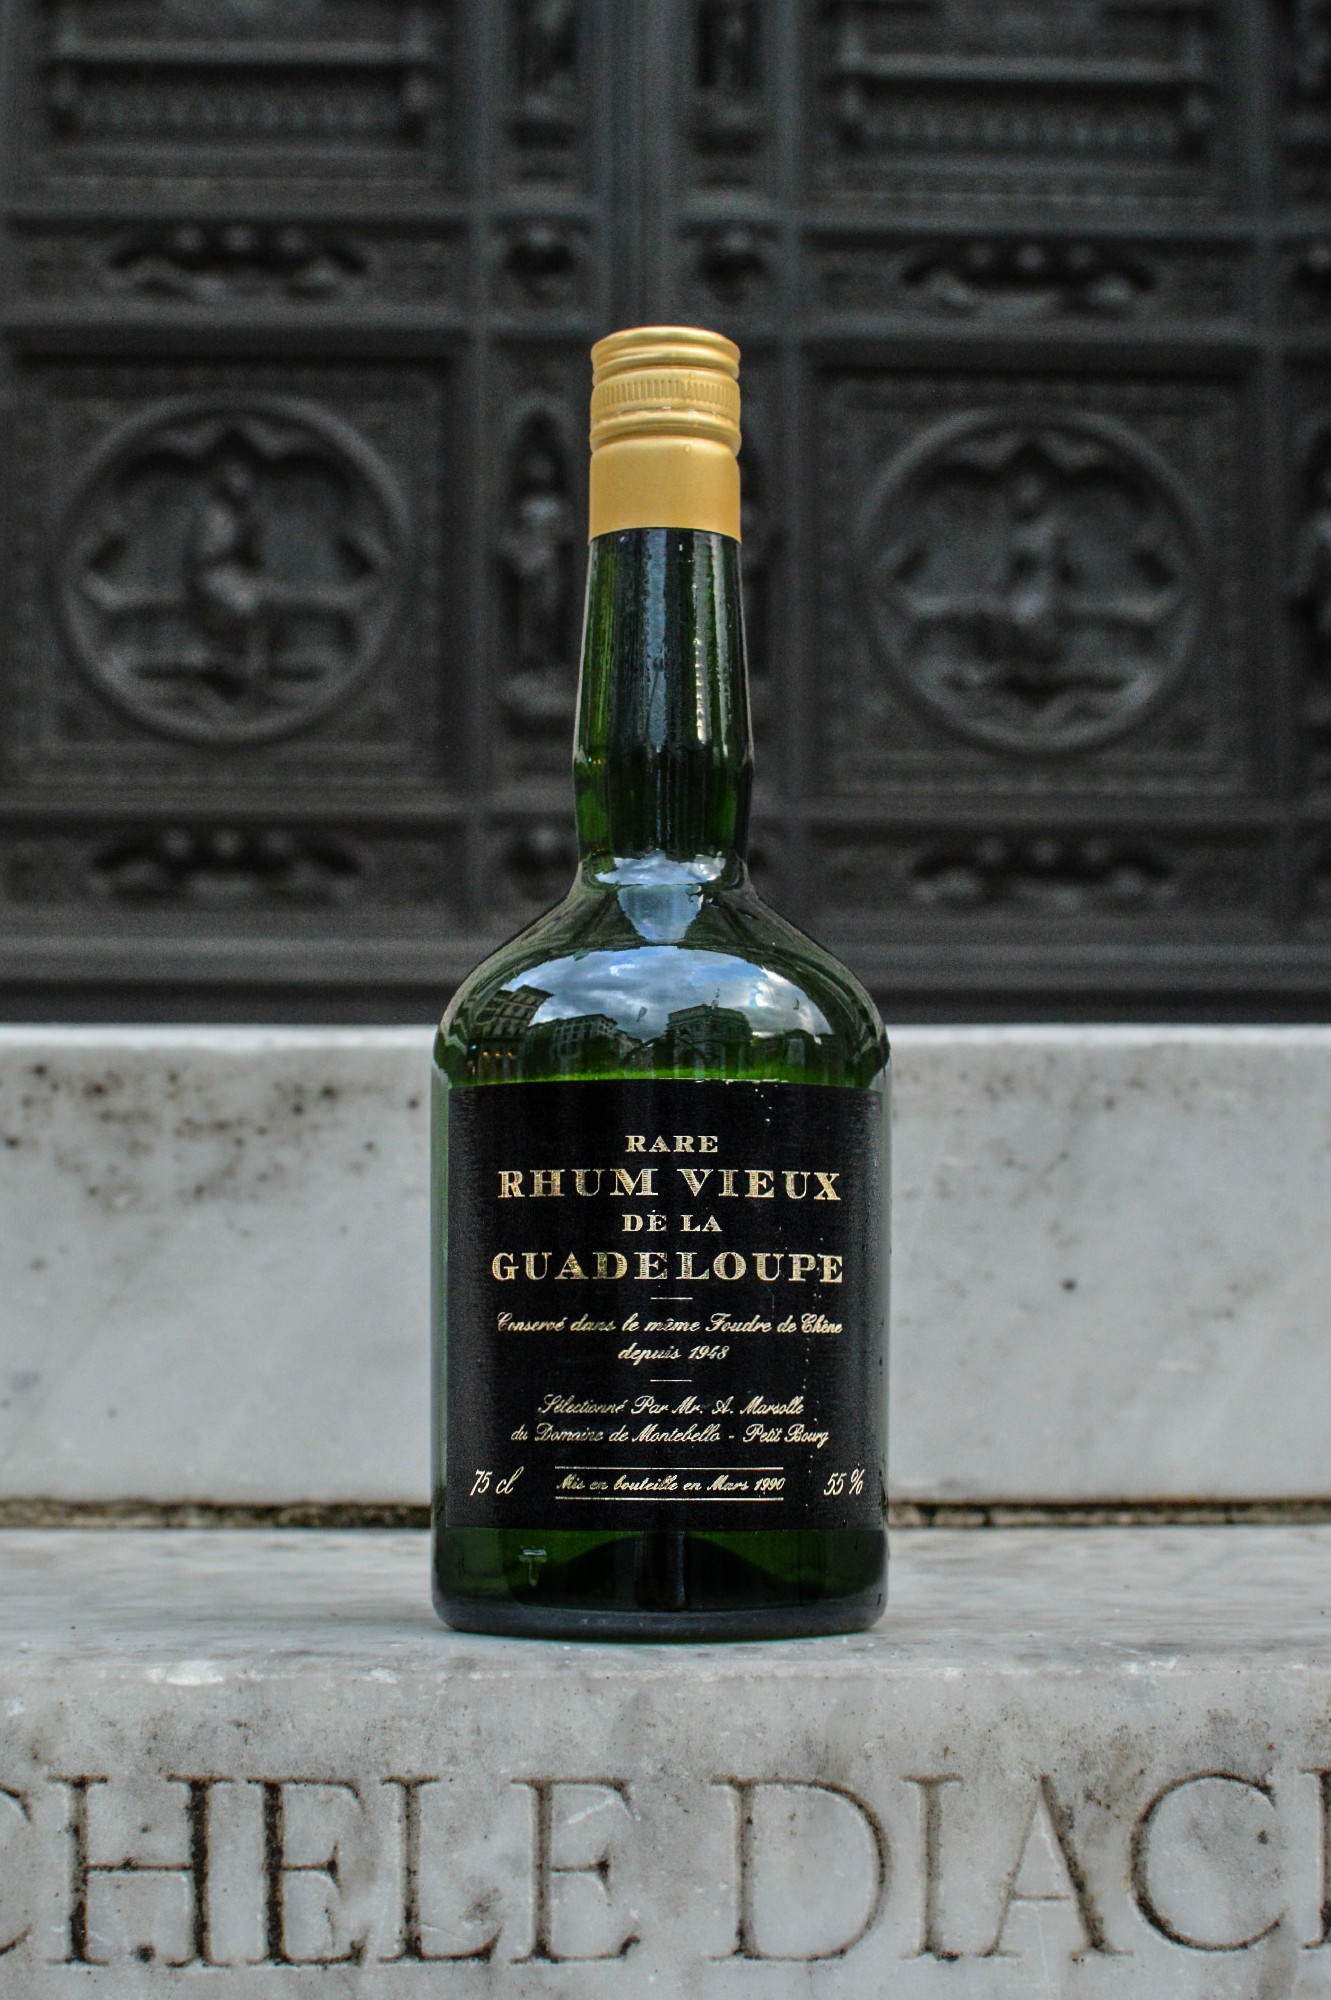 Photo of the bottle taken from user Robert Bauer